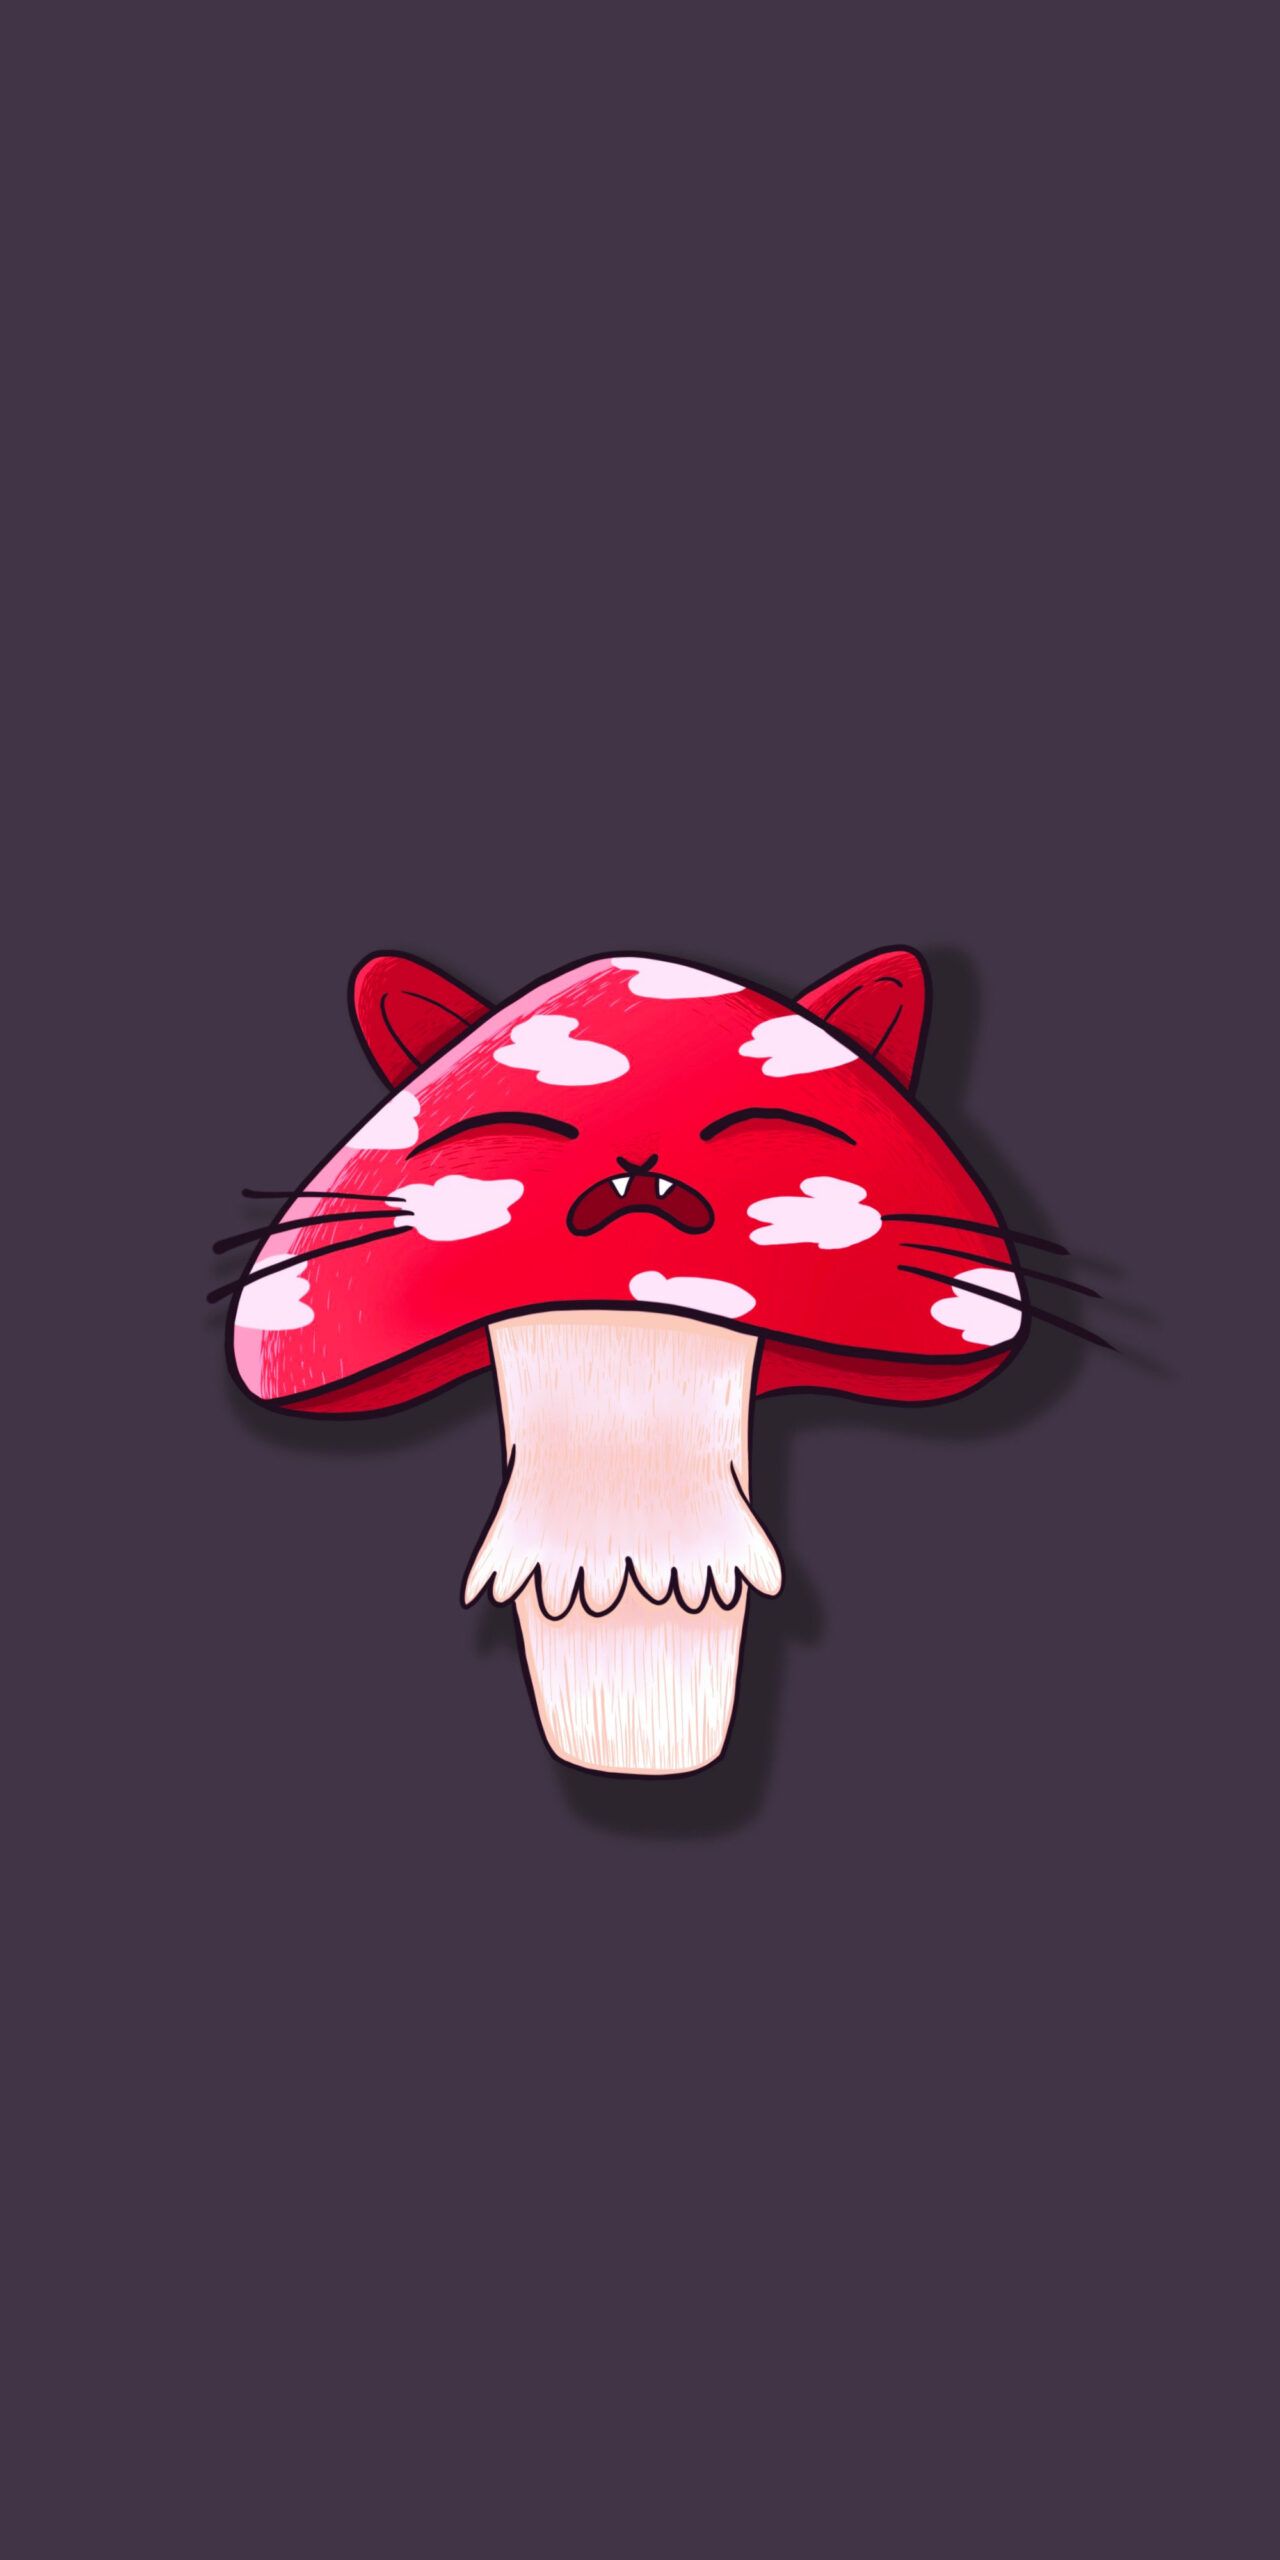 A cartoon mushroom with cat ears on it - Mushroom, cat